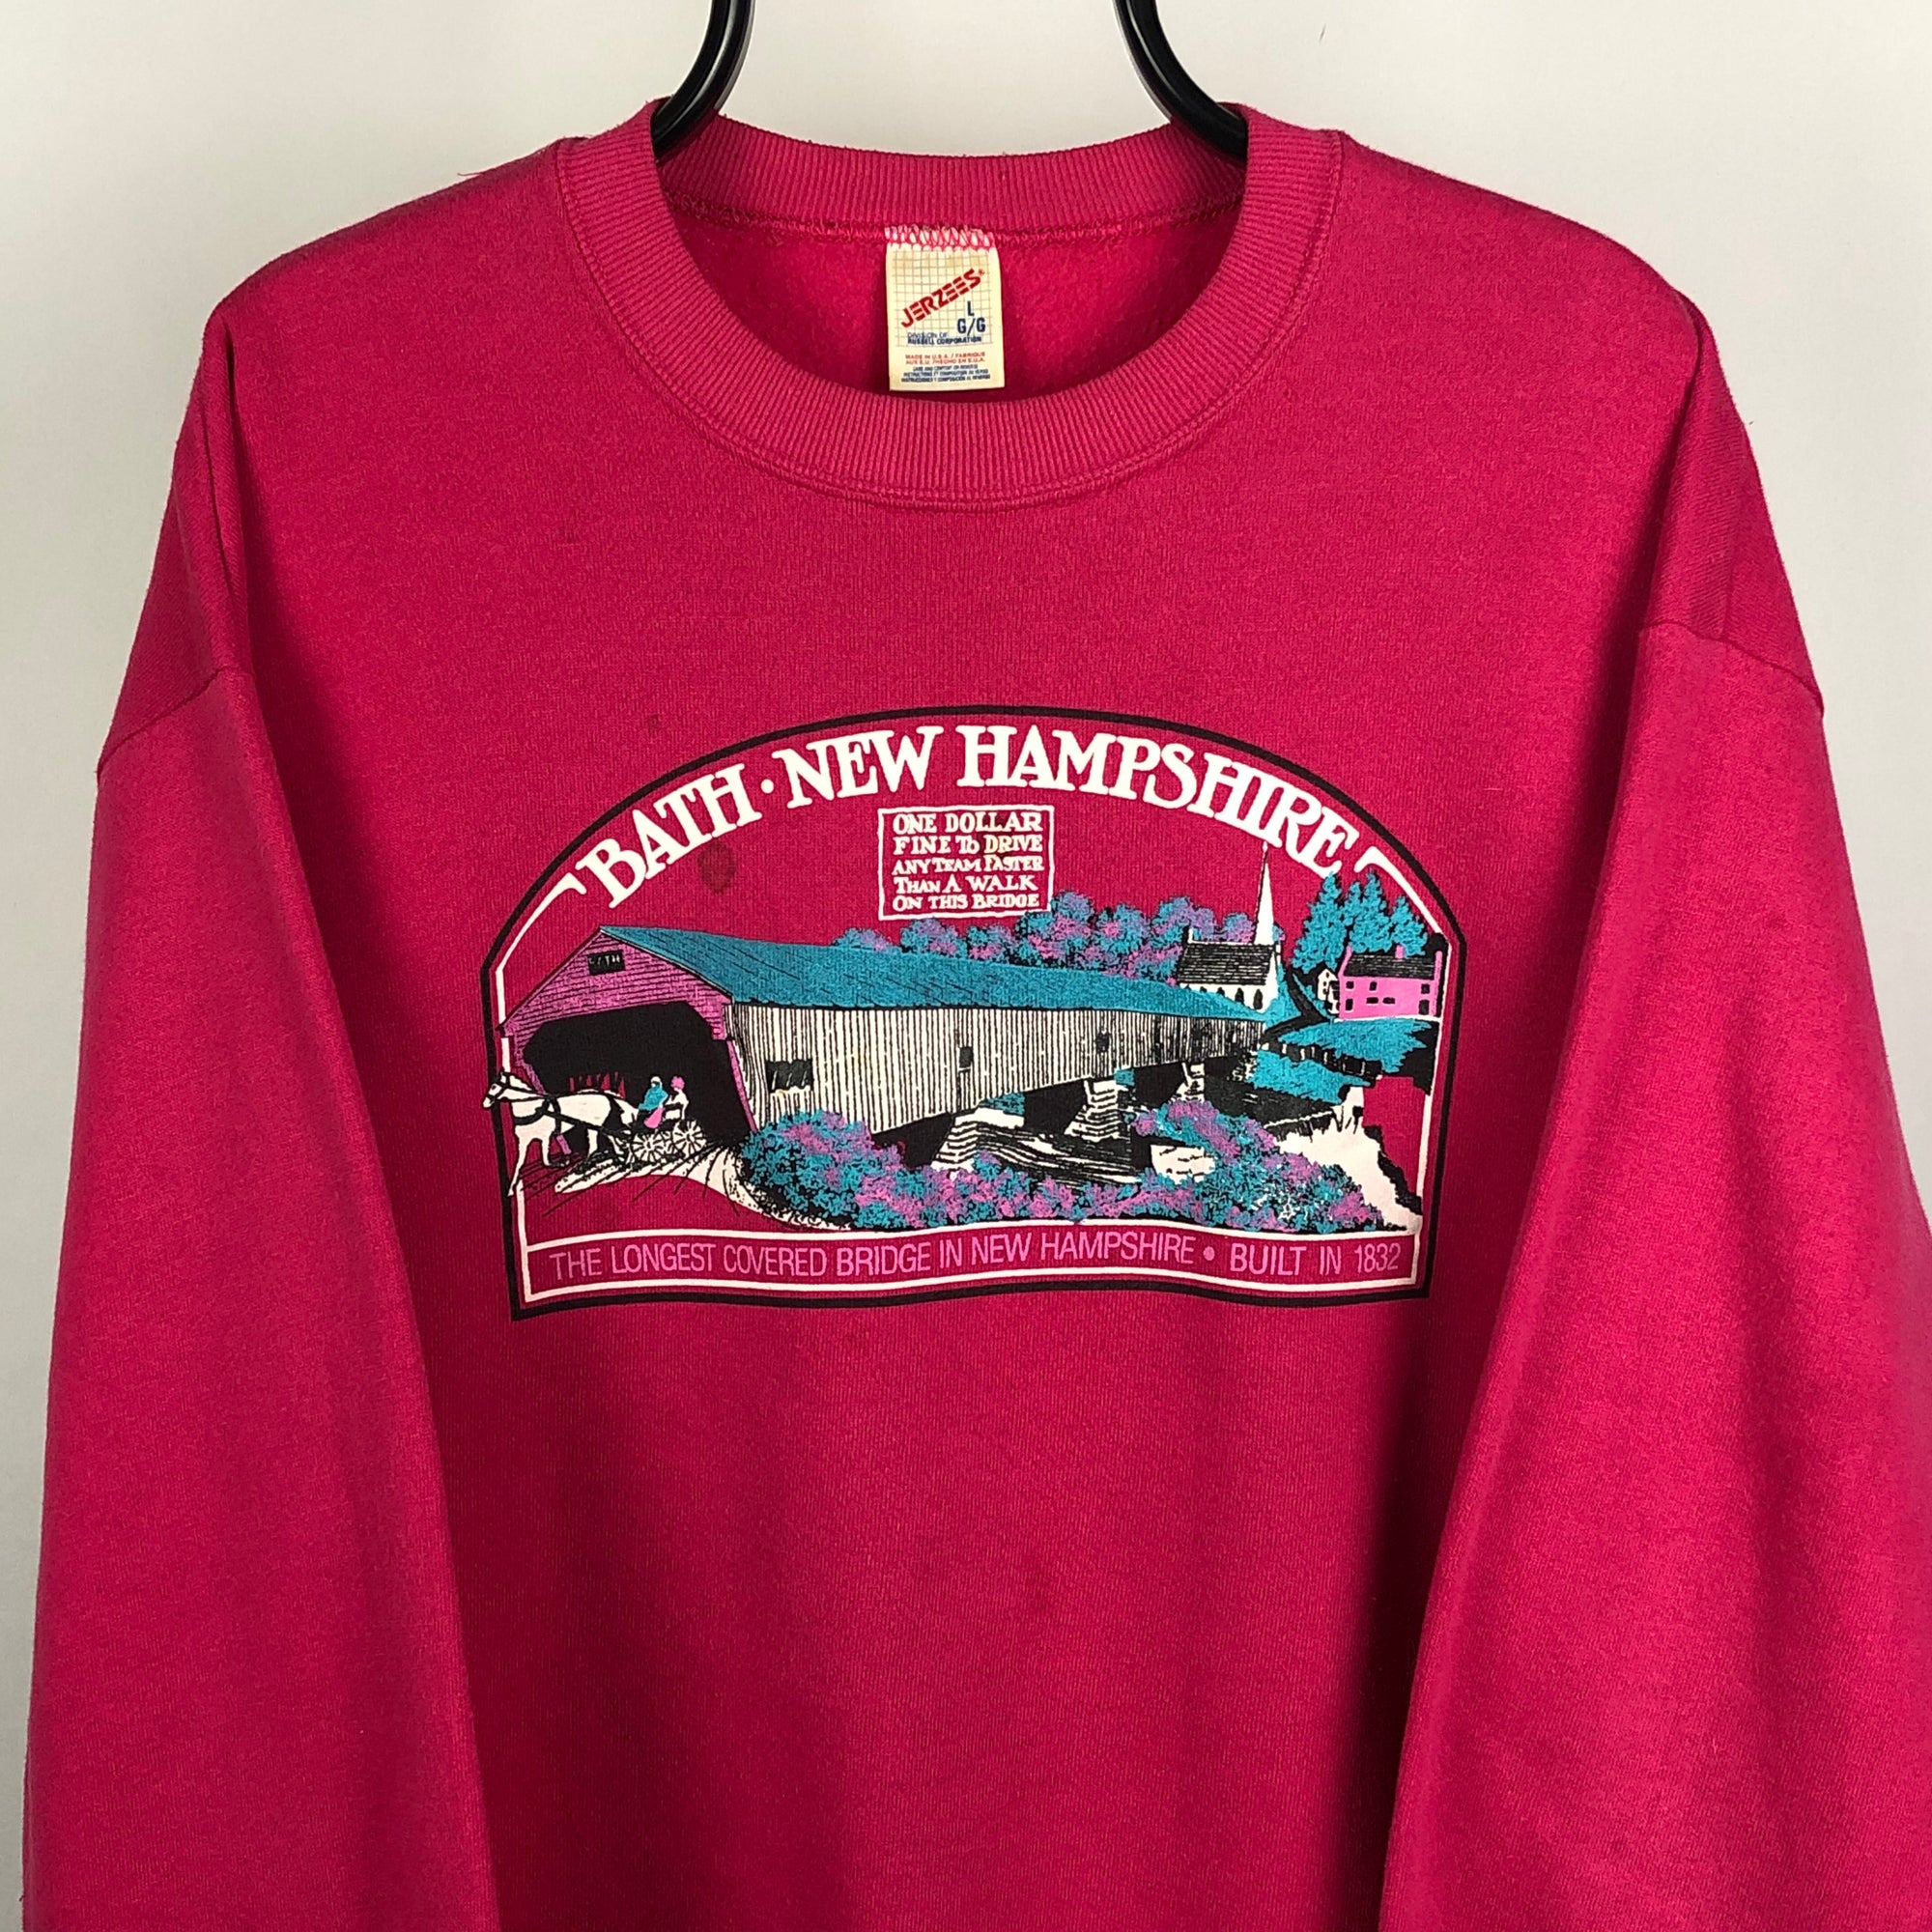 Vintage 'Bath New Hampshire' Sweatshirt in Pink - Men's Large/Women's XL